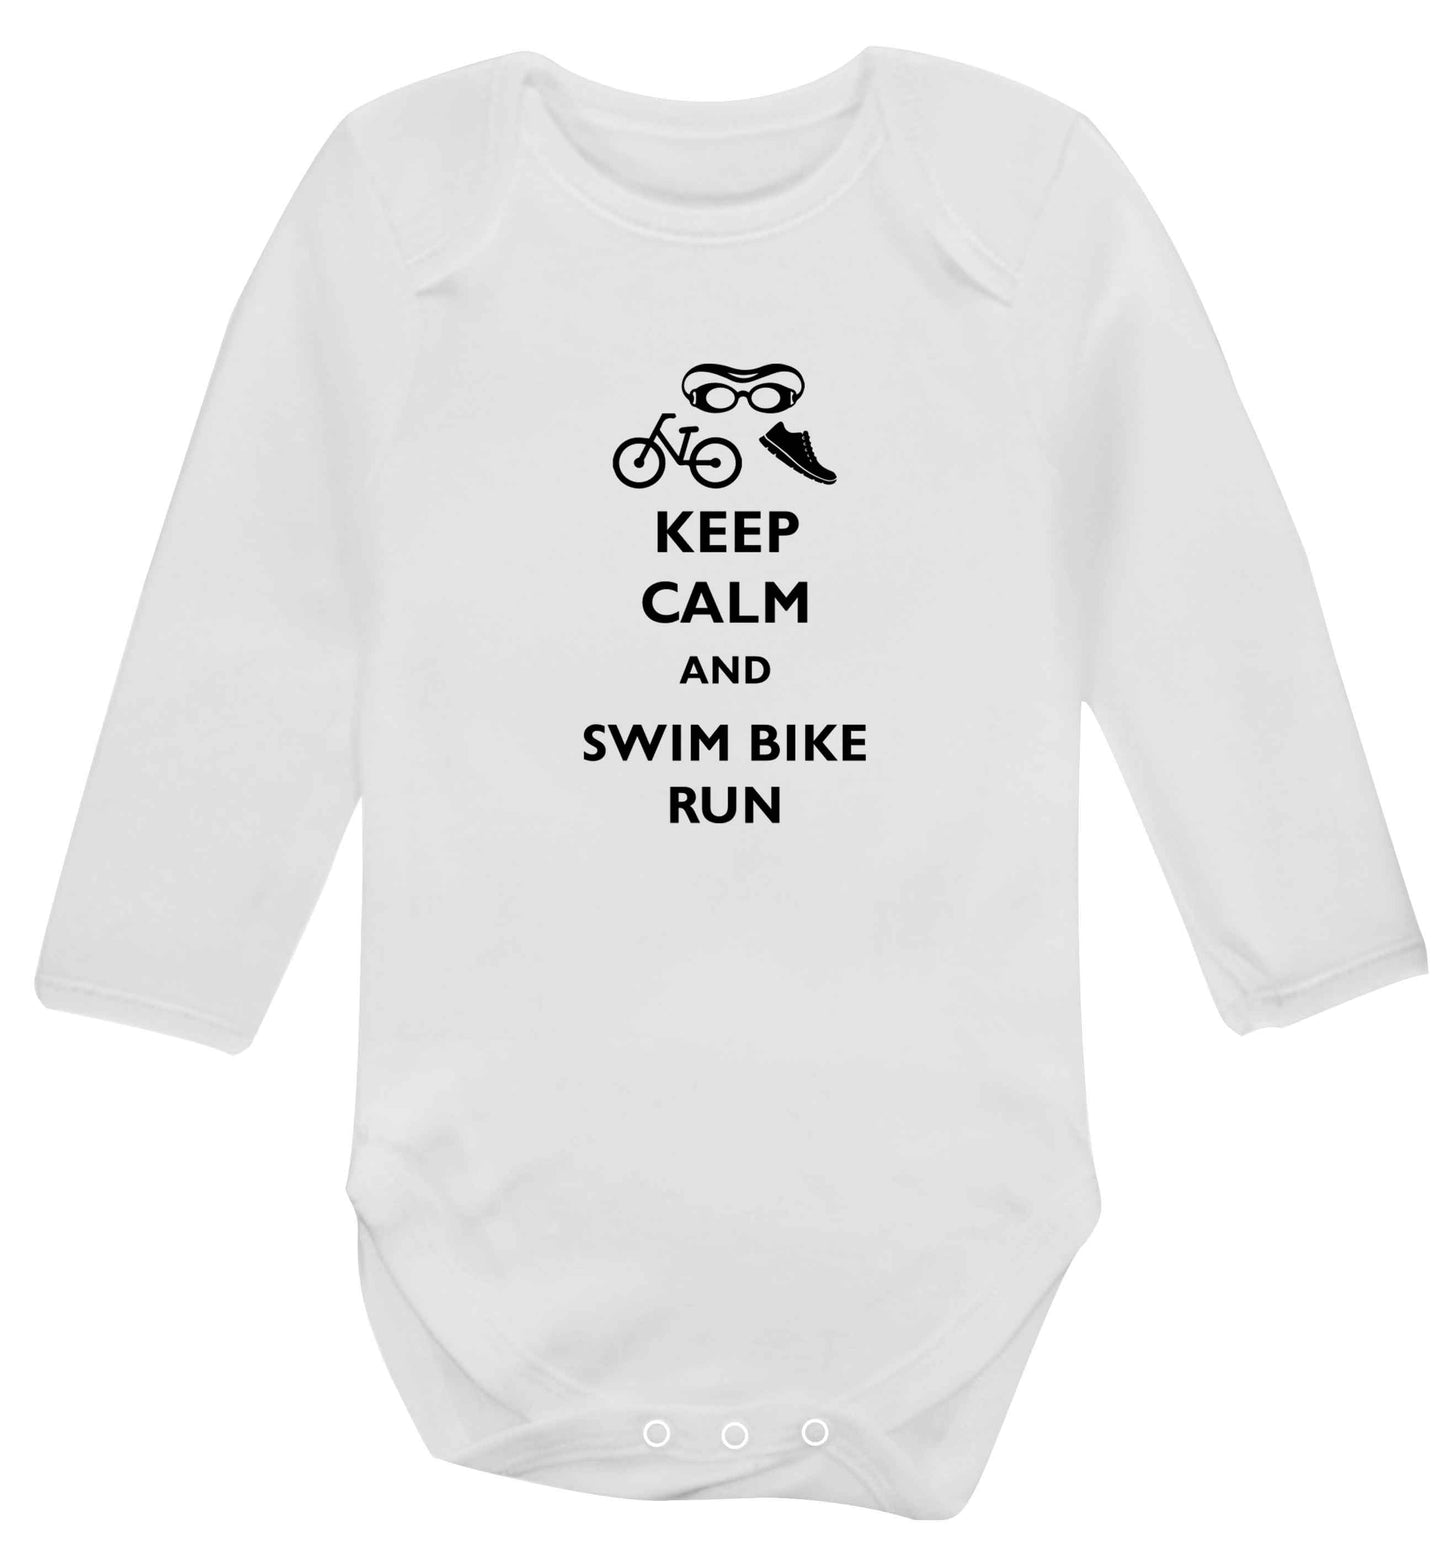 Keep calm and swim bike run baby vest long sleeved white 6-12 months